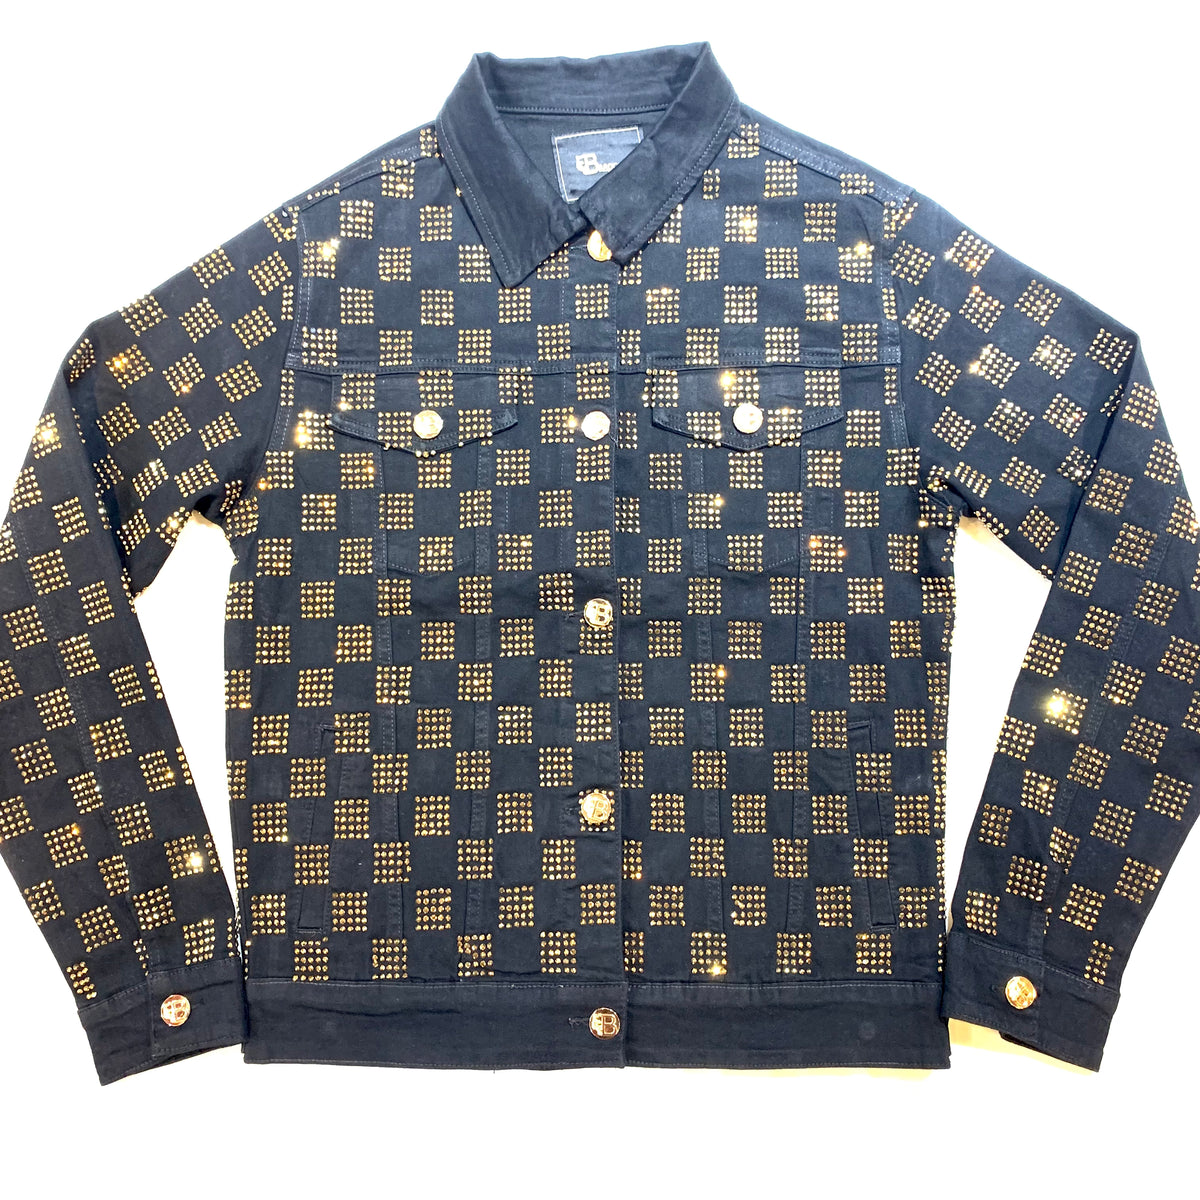 Louis Vuitton Men's Button Up Jacket Distorted Damier Denim